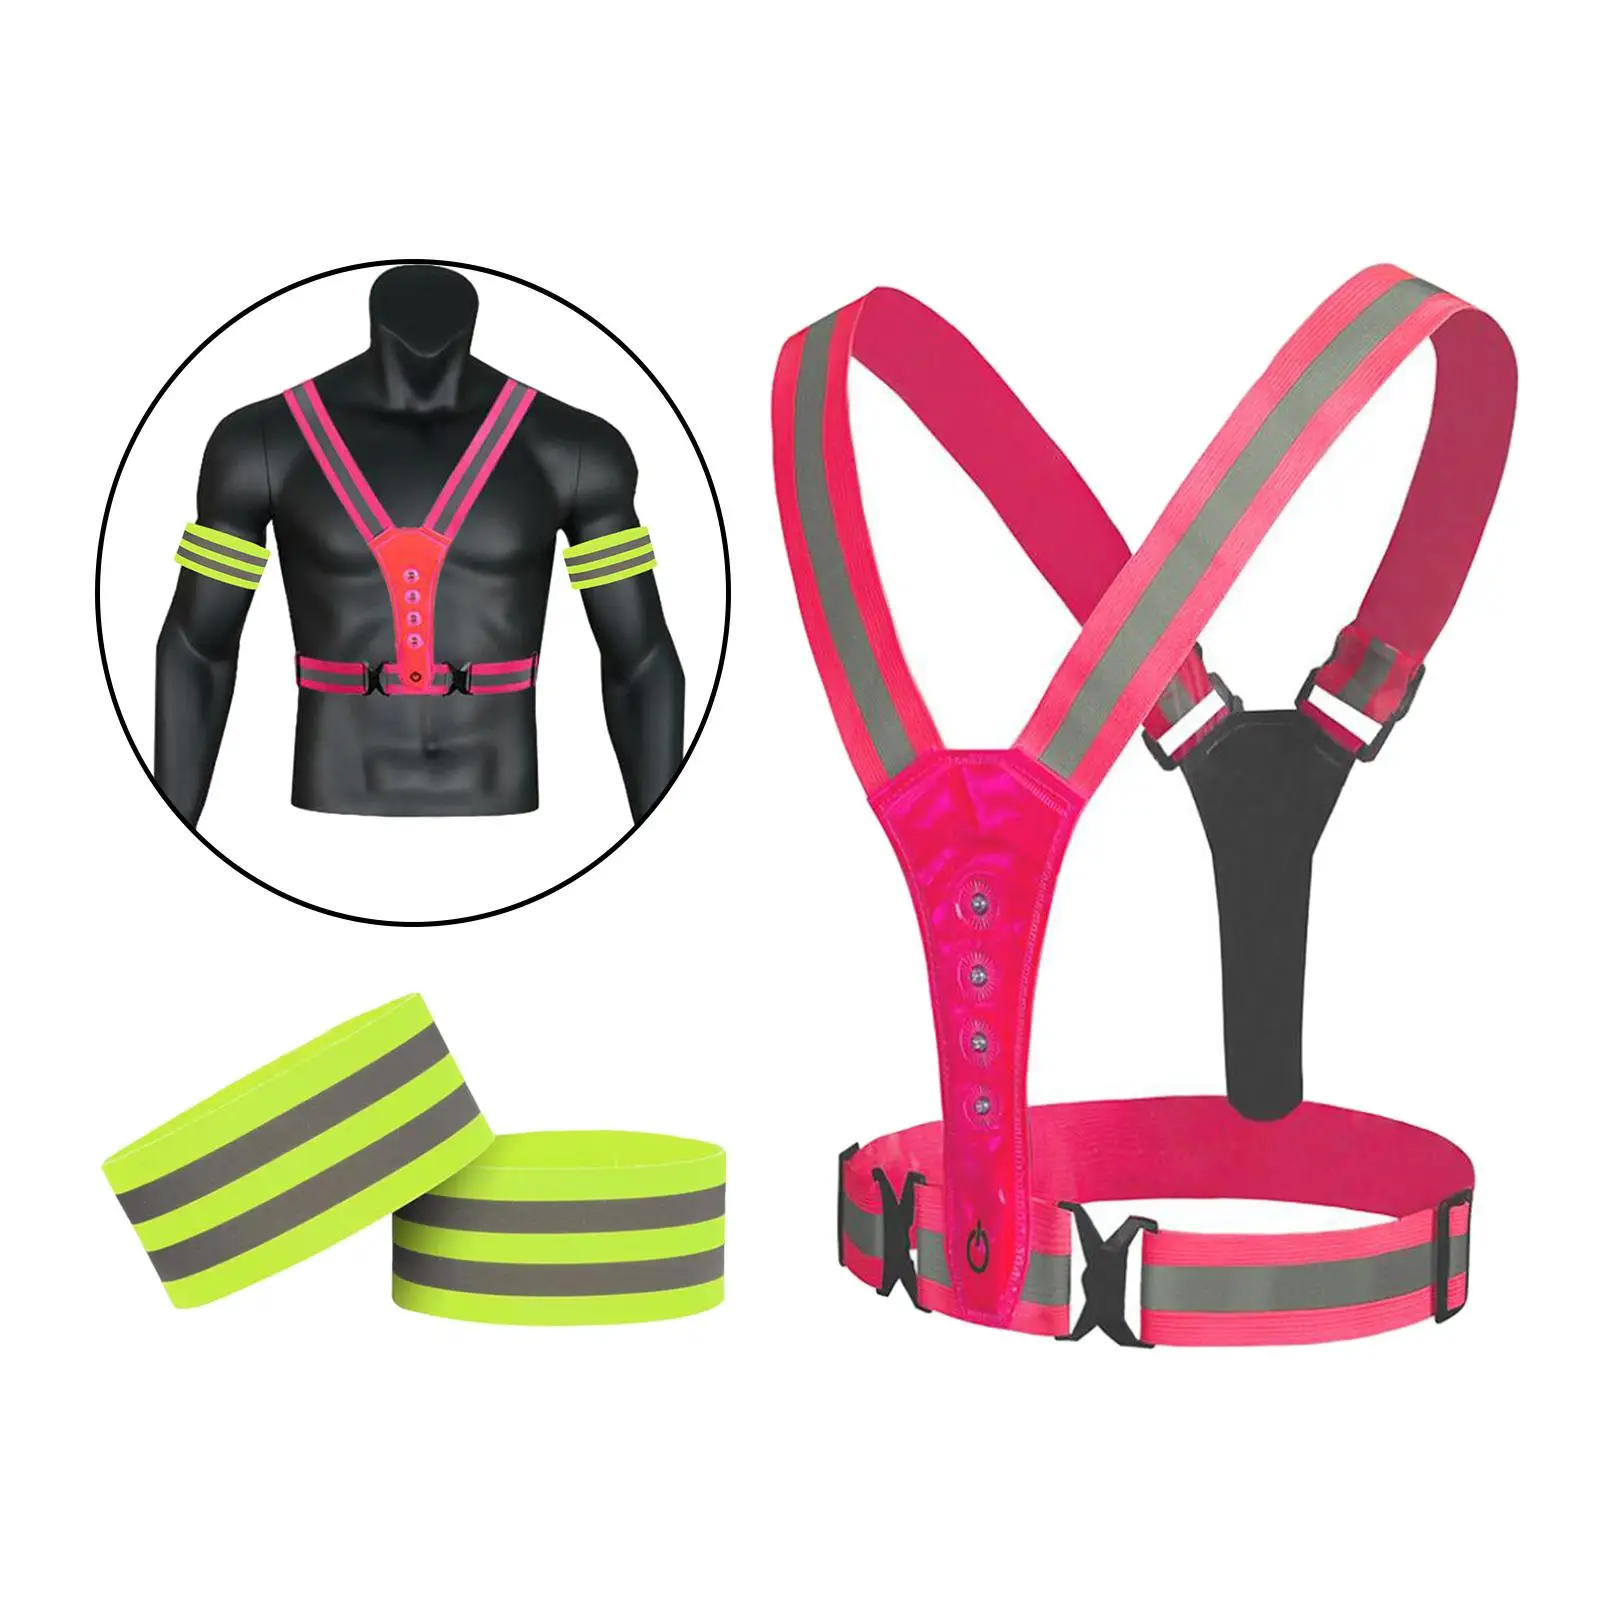 Reflective Vest Safety Straps USB Rechargeable LED Light up Breathable Adjustable for Running Jogging Working Walking Men Women